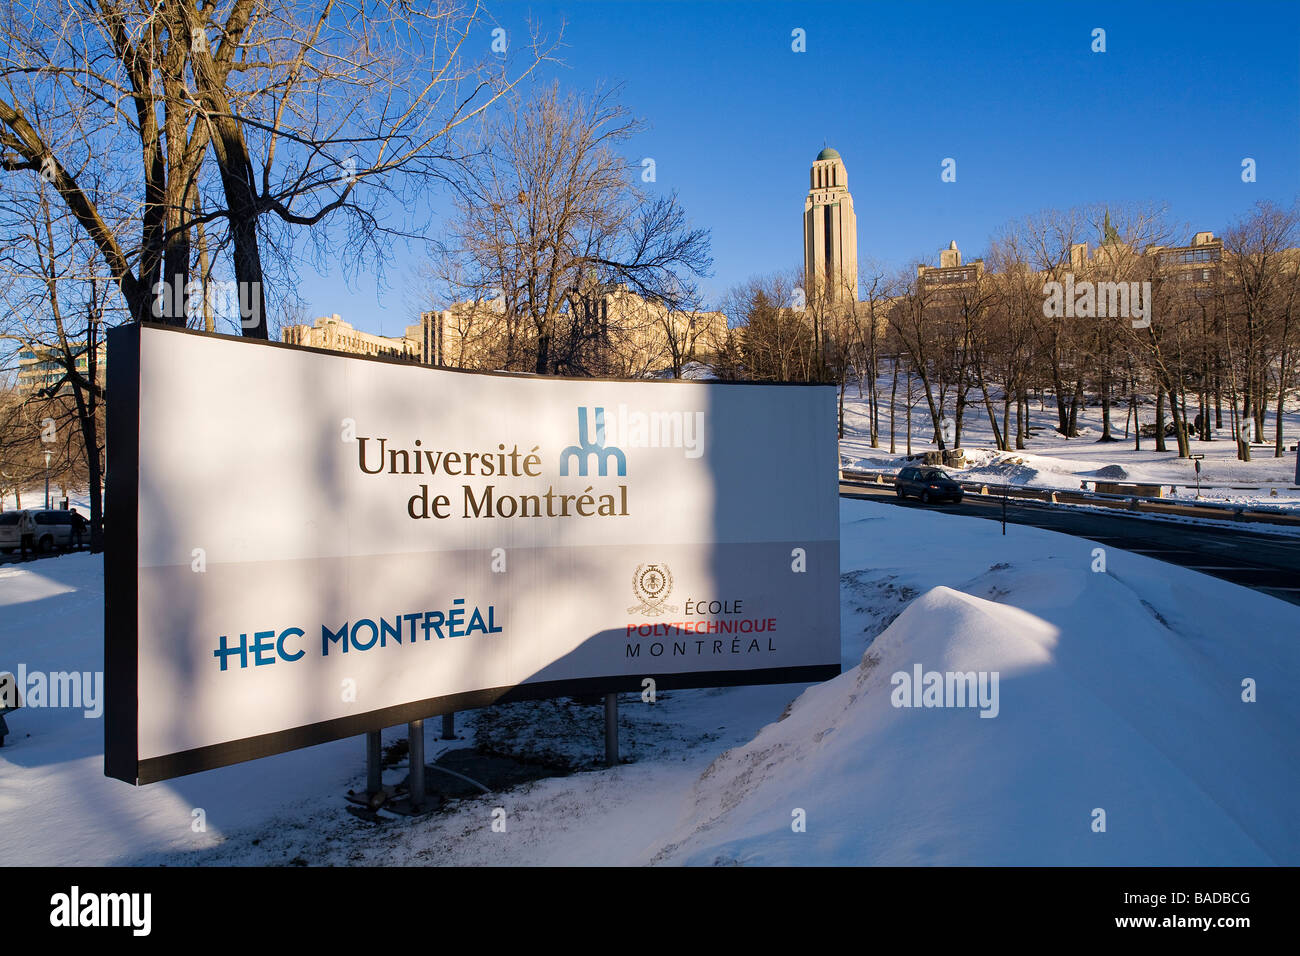 Canada, Quebec Province, Montreal, HEC (Major Business School), architect Dan S. Hanganu, entrance sign Stock Photo